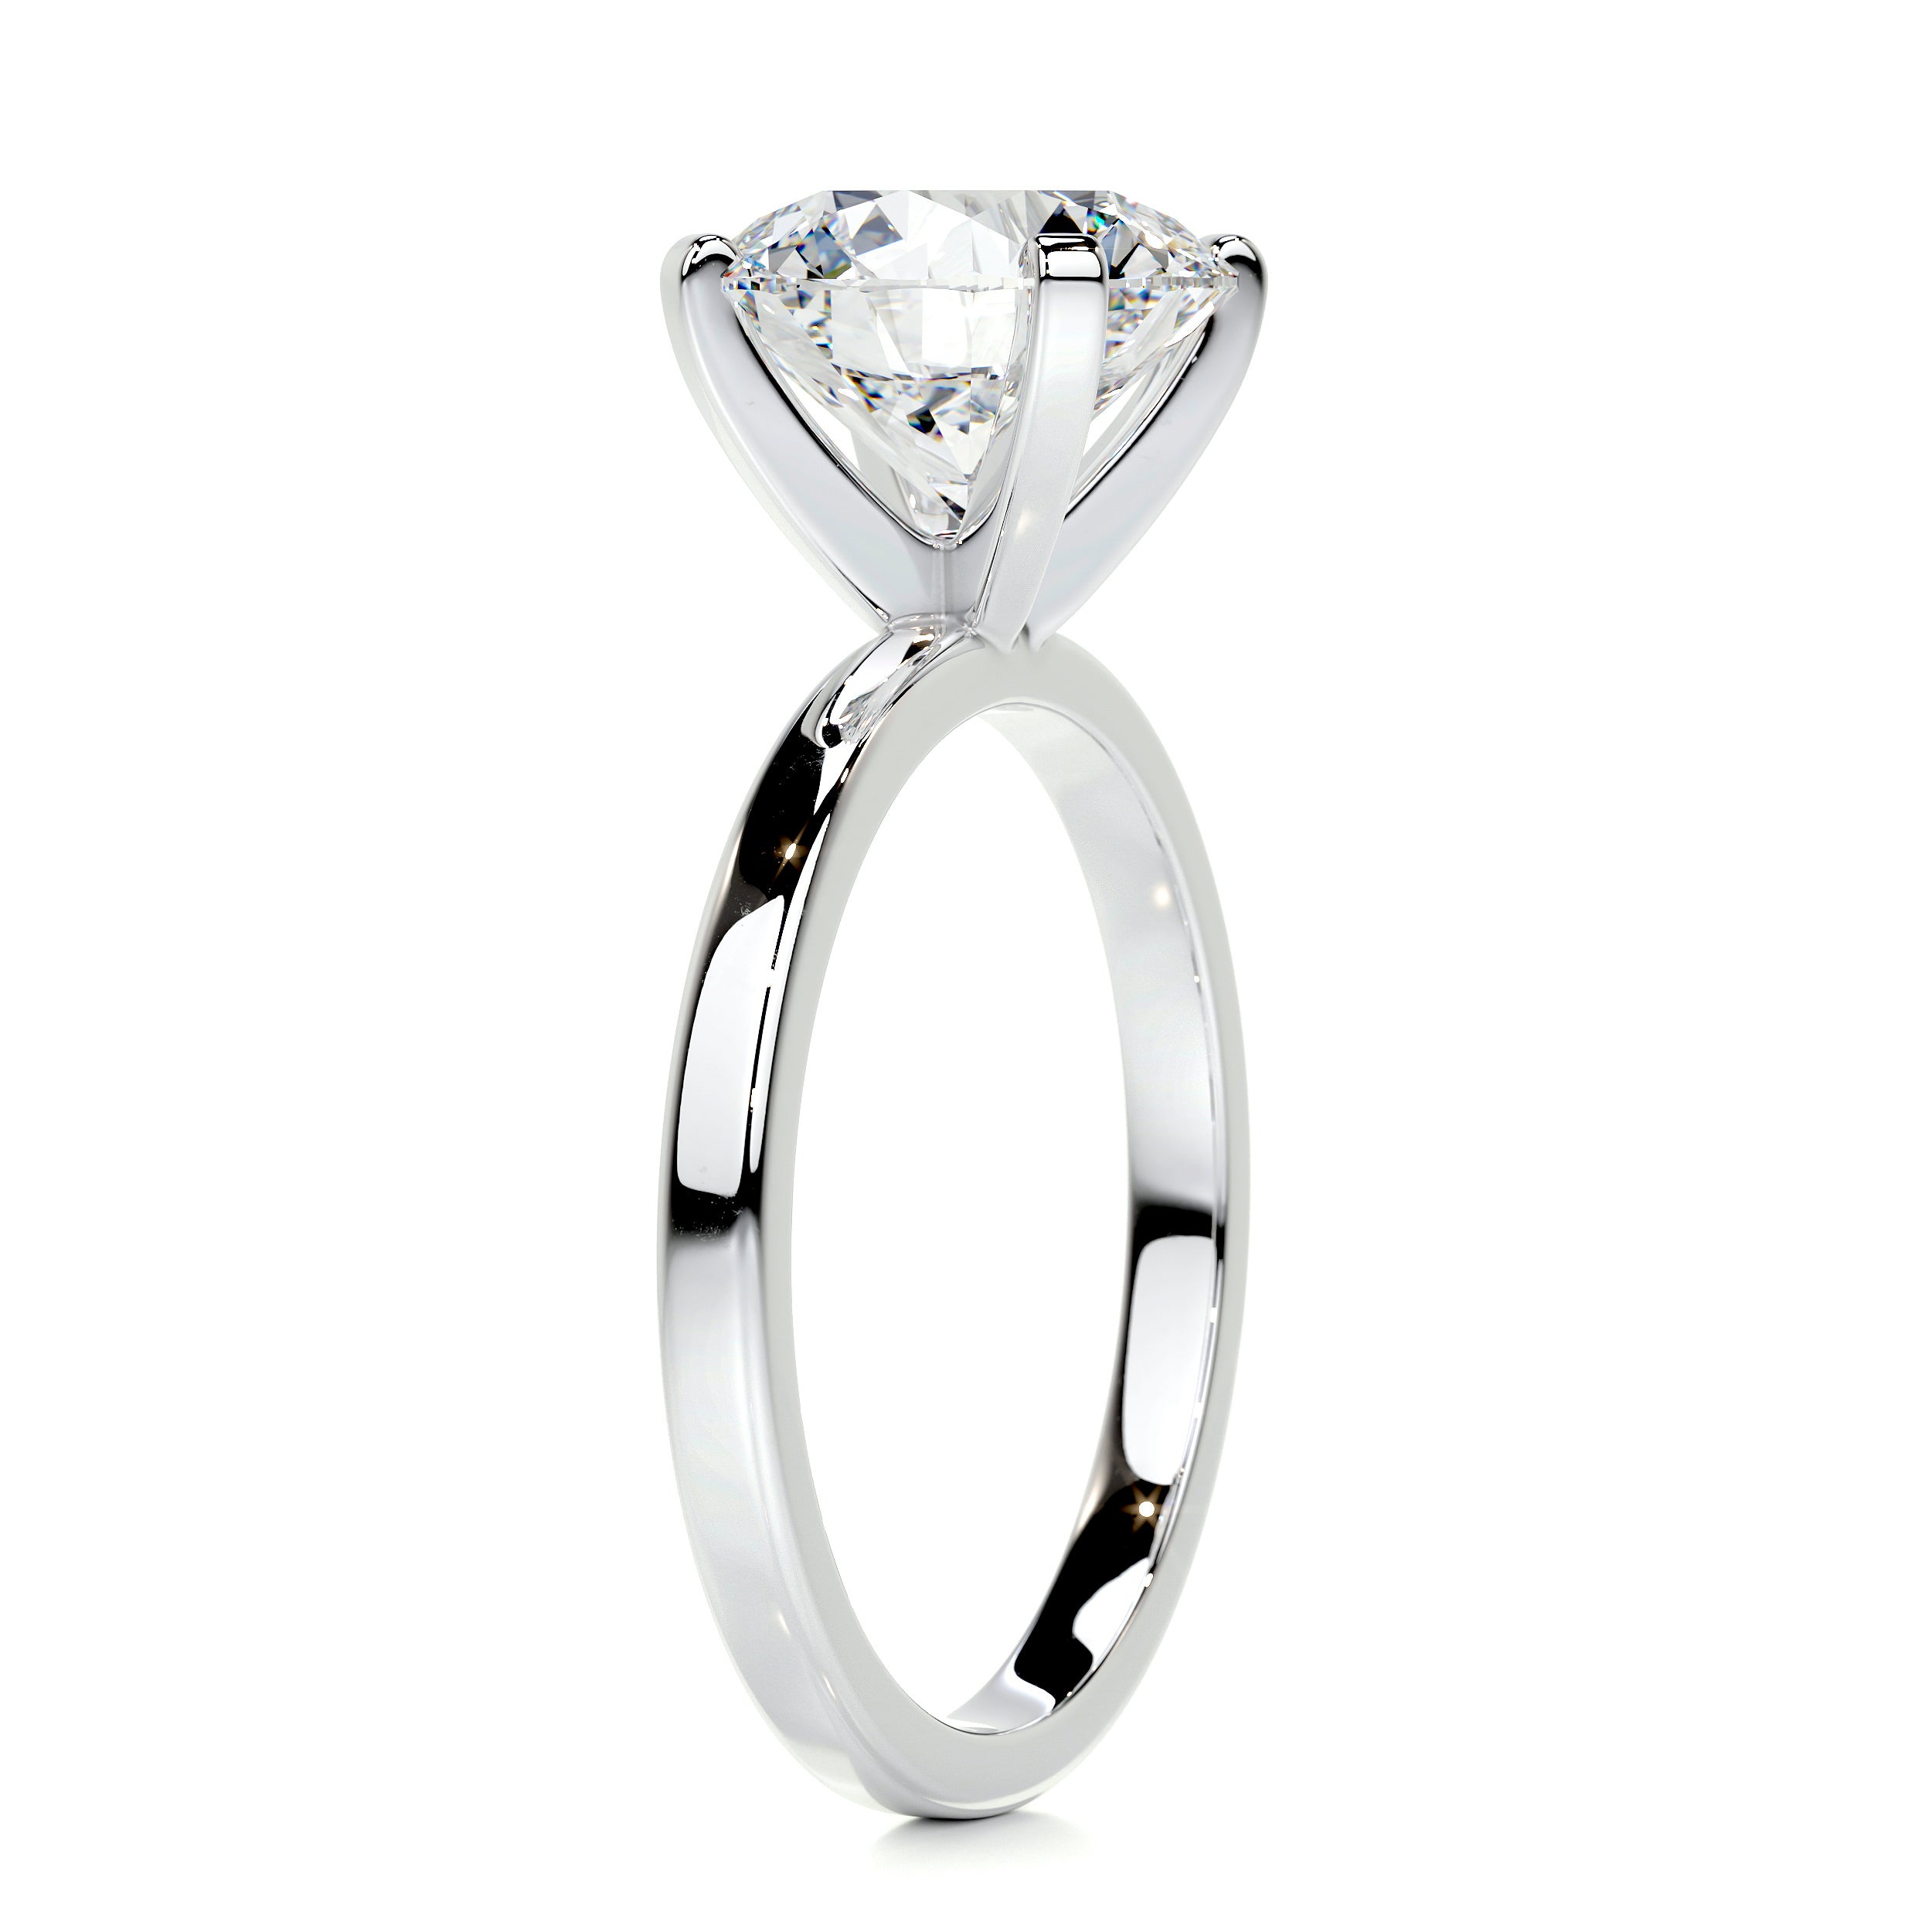 Jessica Diamond Engagement Ring   (3 Carat) -14K White Gold